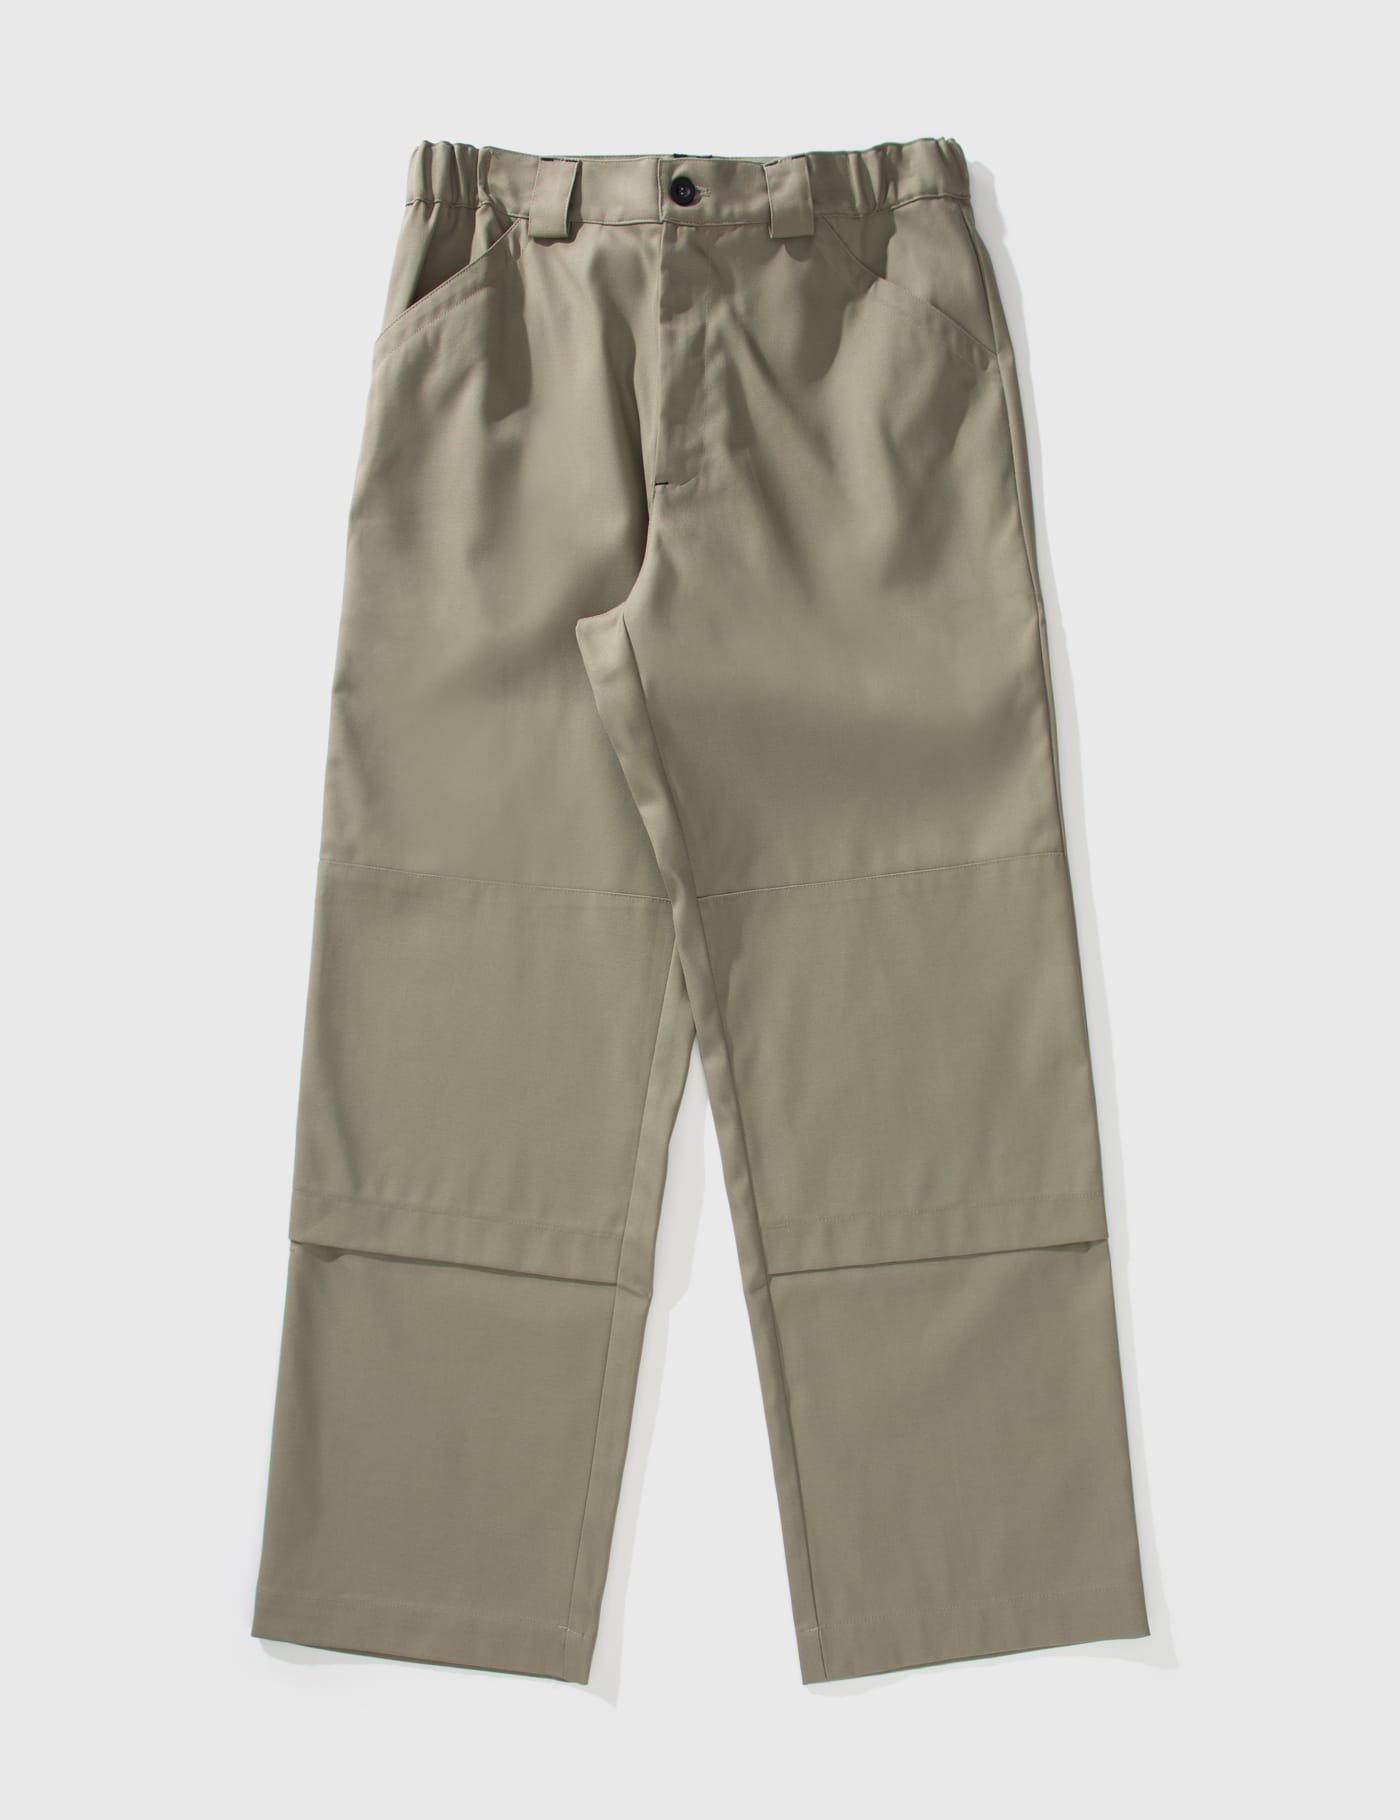 GR10K - Replicated Klopman Pants | HBX - Globally Curated 